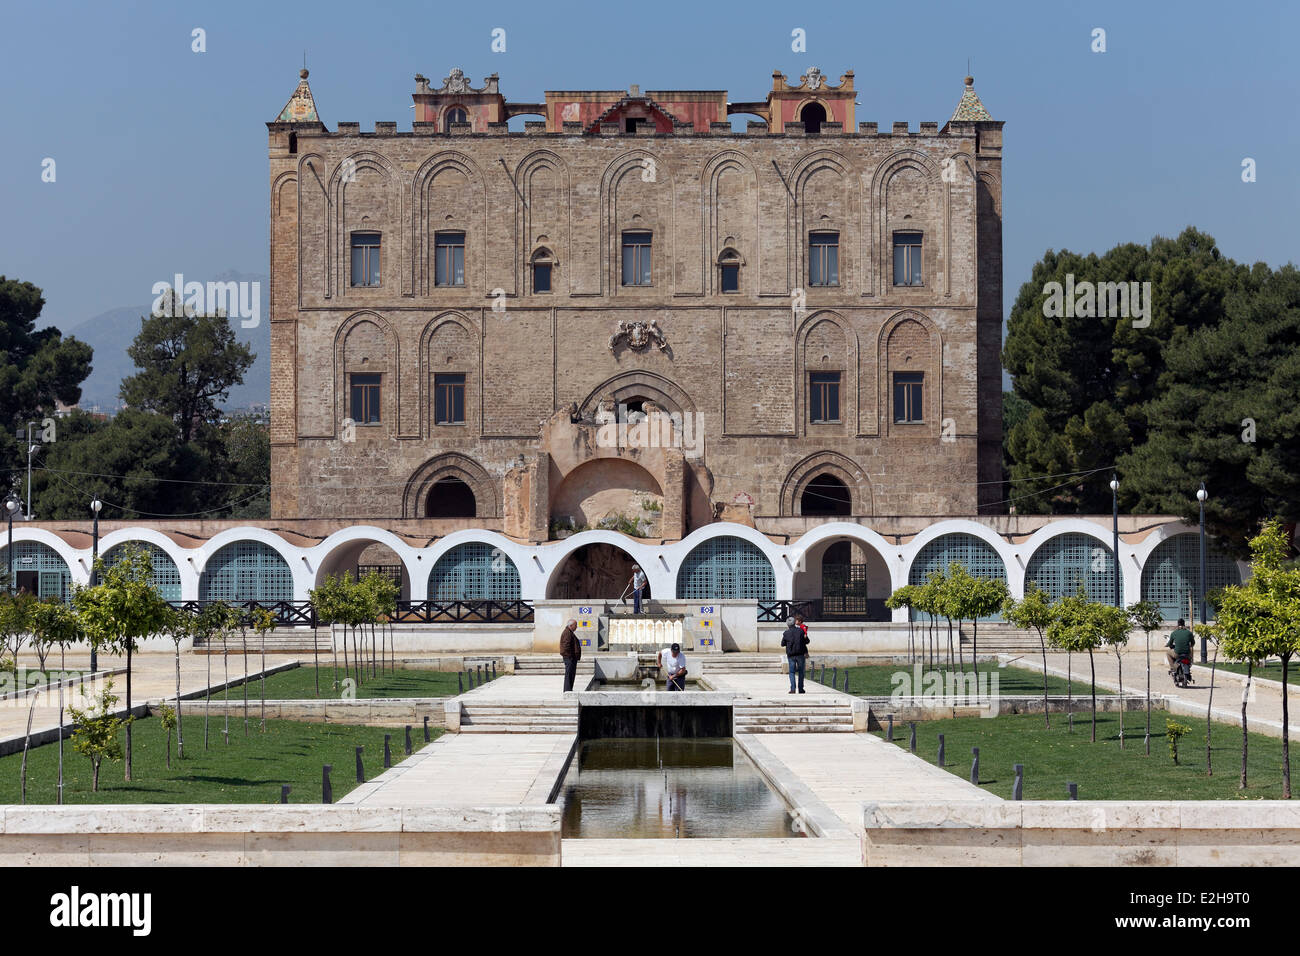 Norman castle Zisa, Palermo, Province of Palermo, Sicily, Italy Stock Photo